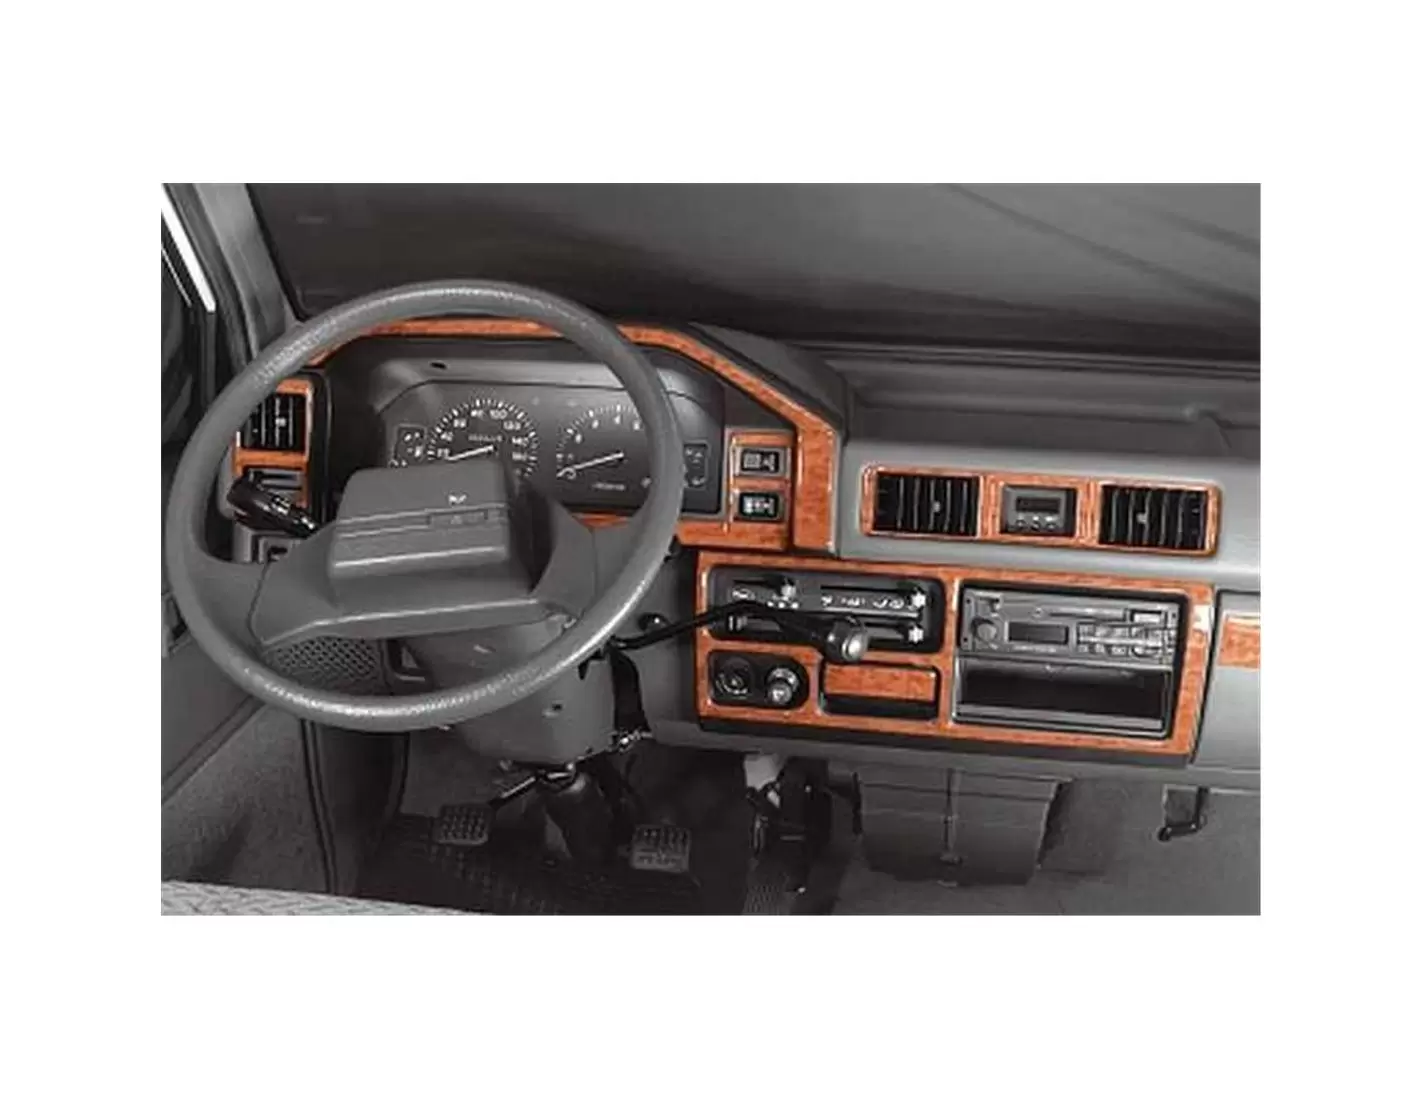 Mitsubishi L 300 08.1988 3M 3D Interior Dashboard Trim Kit Dash Trim Dekor 16-Parts